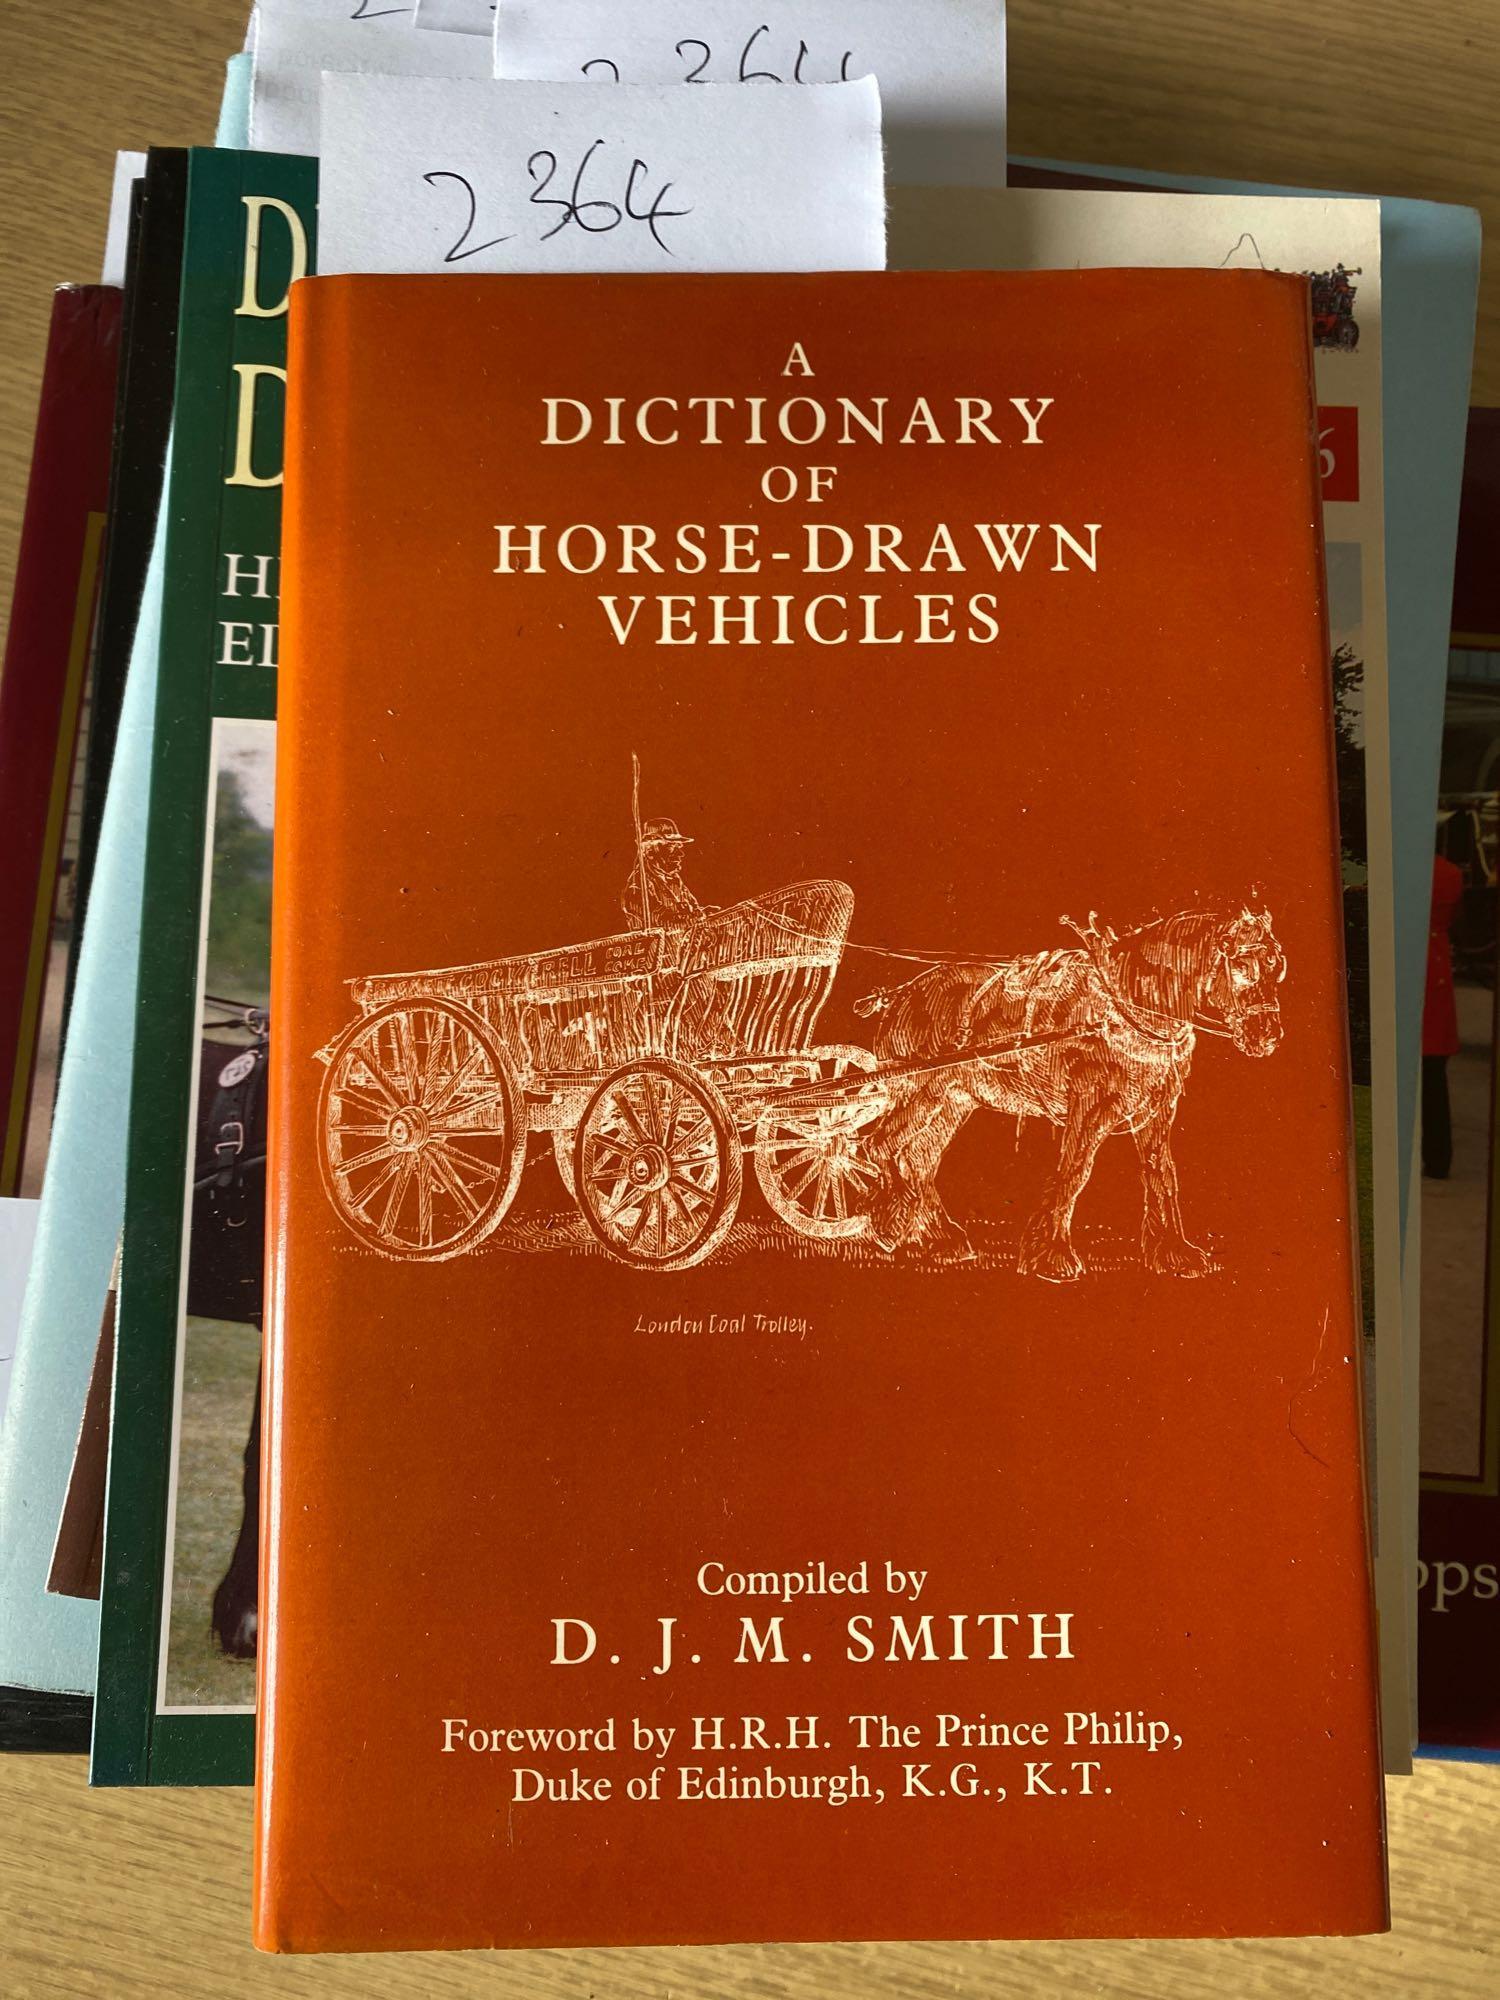 Nine books on horse-drawn vehicles